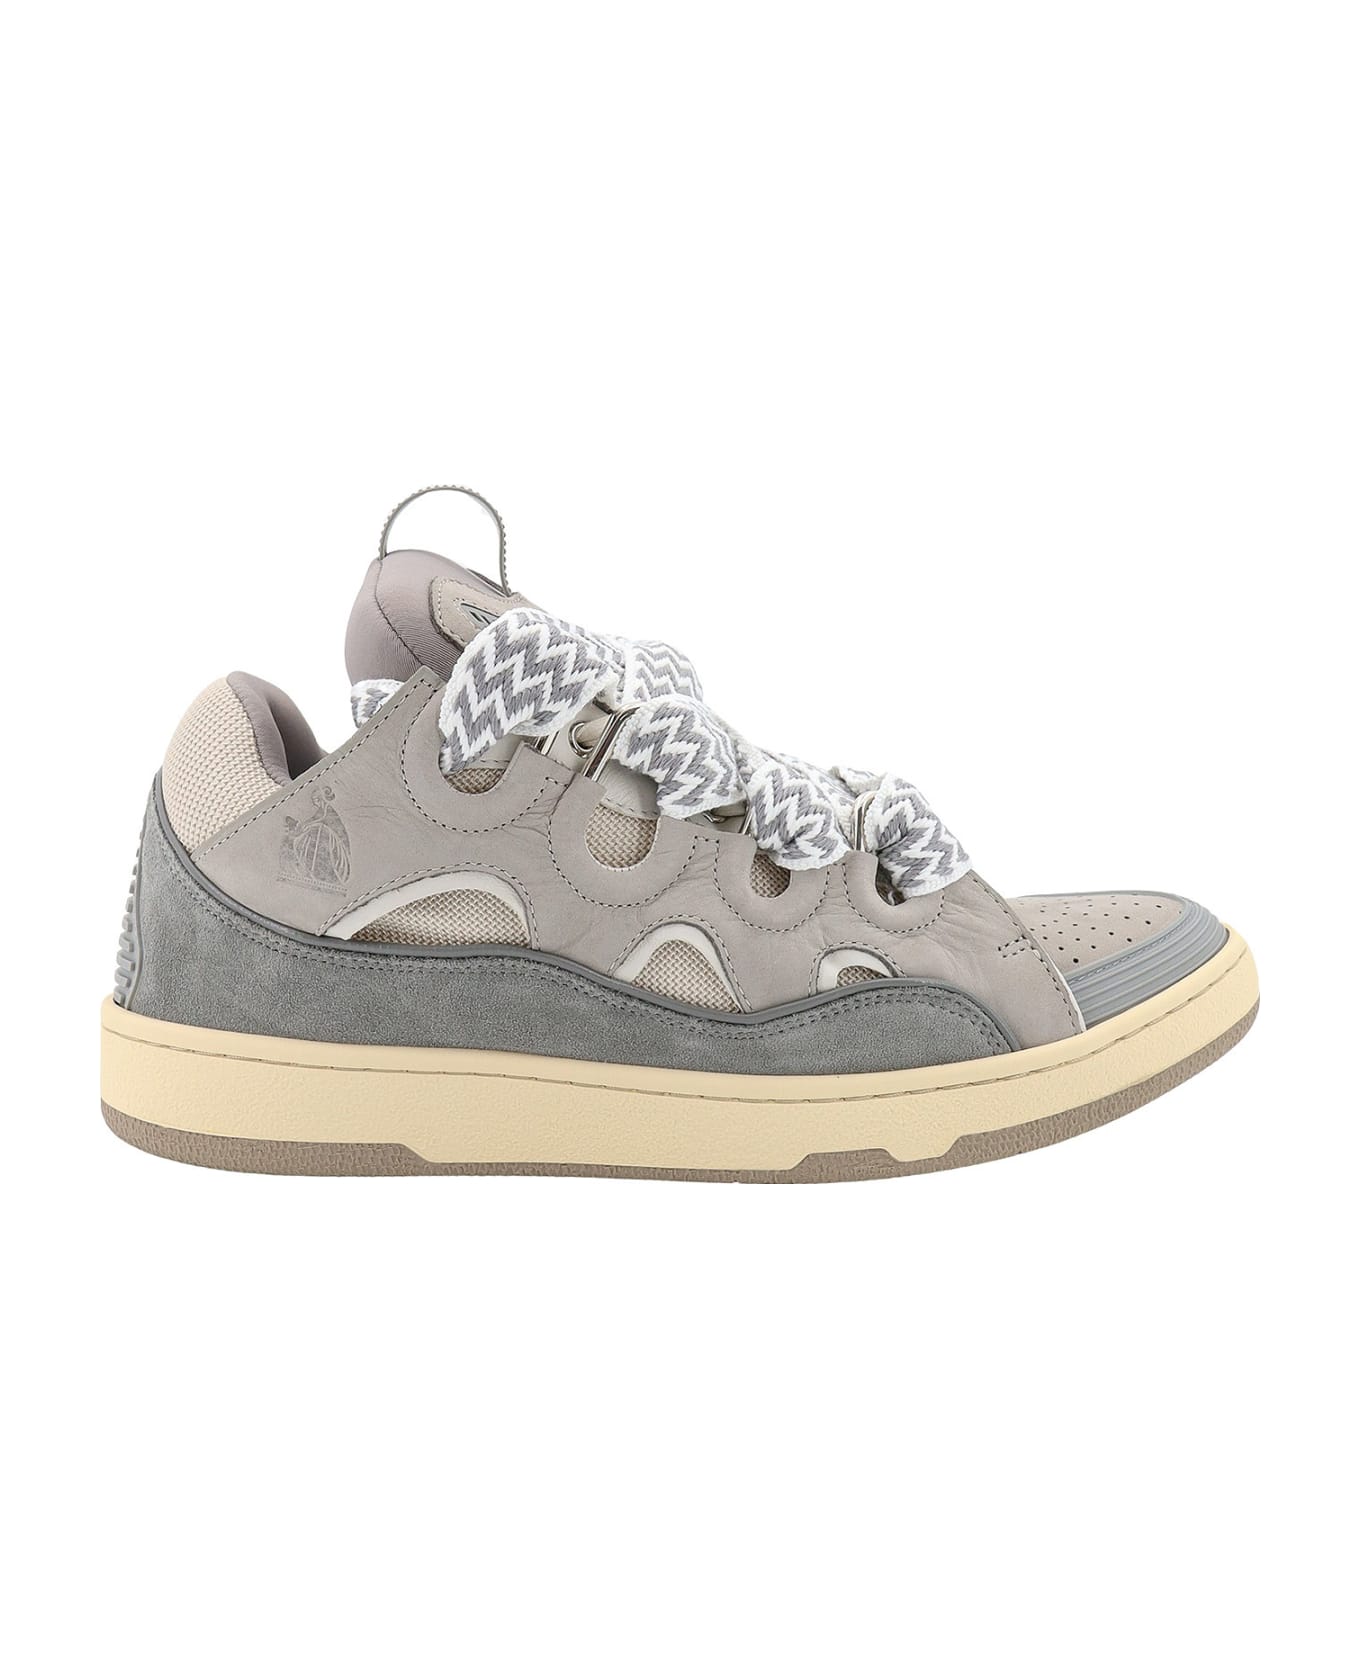 Lanvin Curb Sneakers - Grey スニーカー